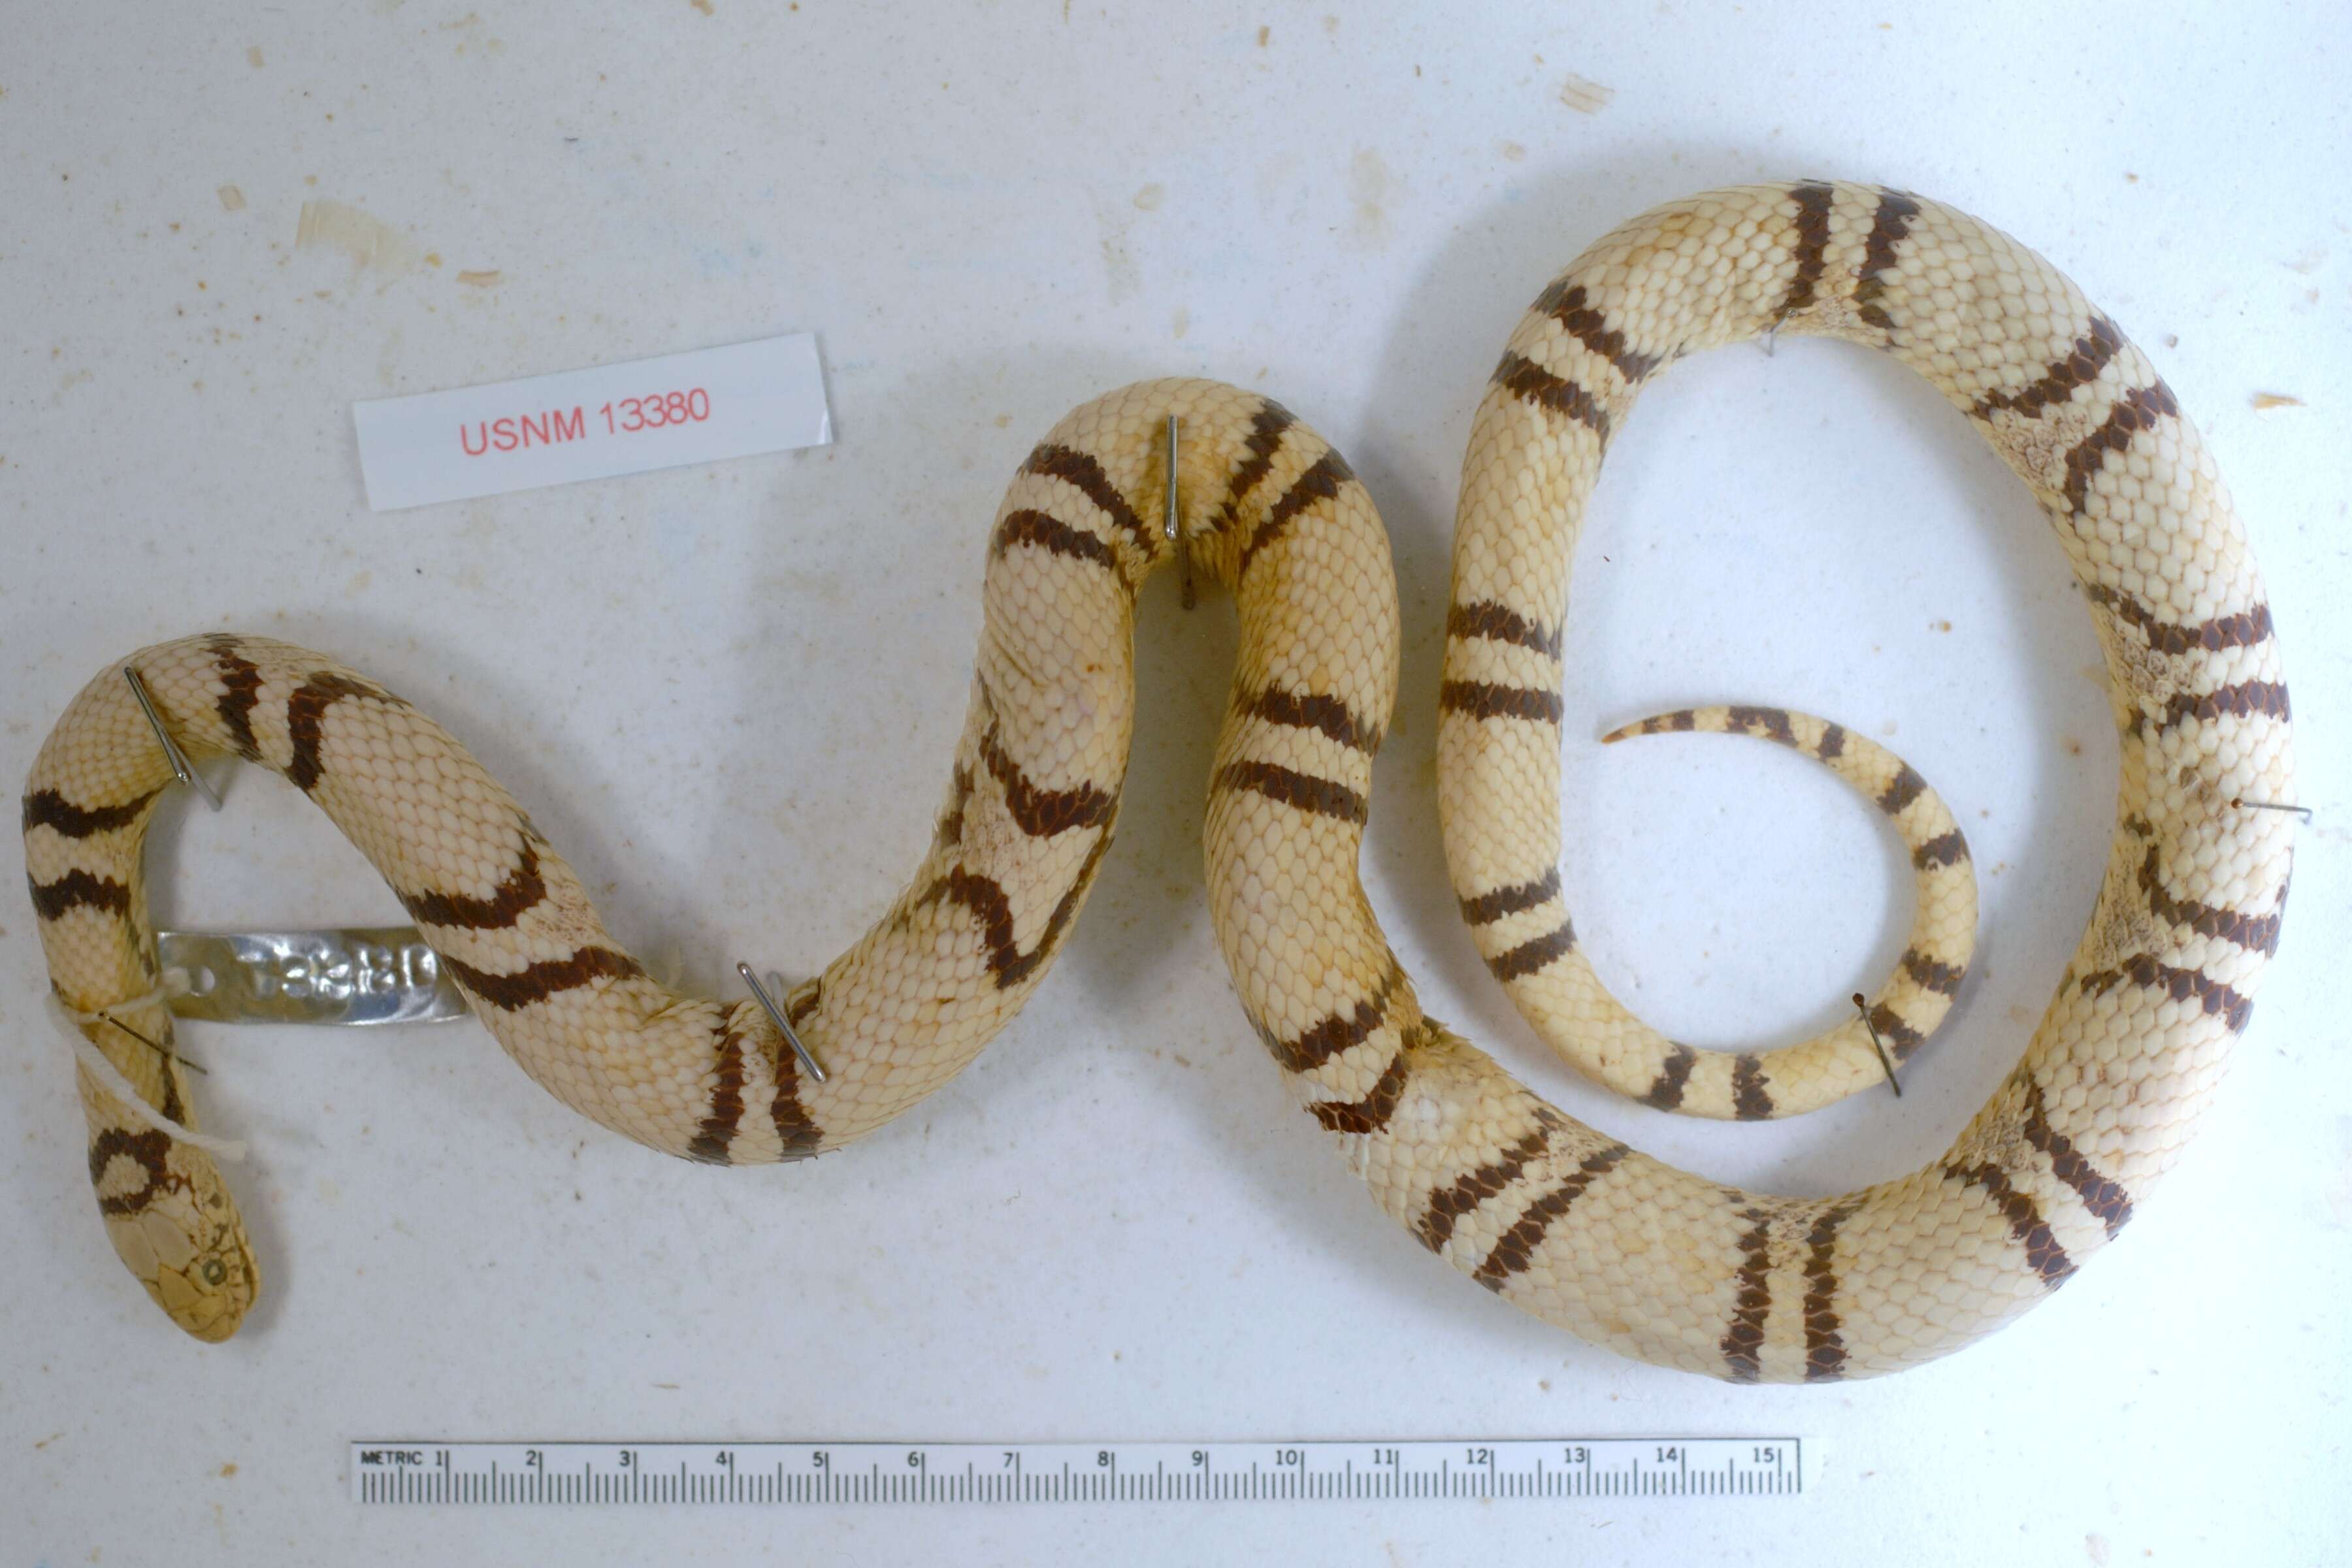 Image of milk snake